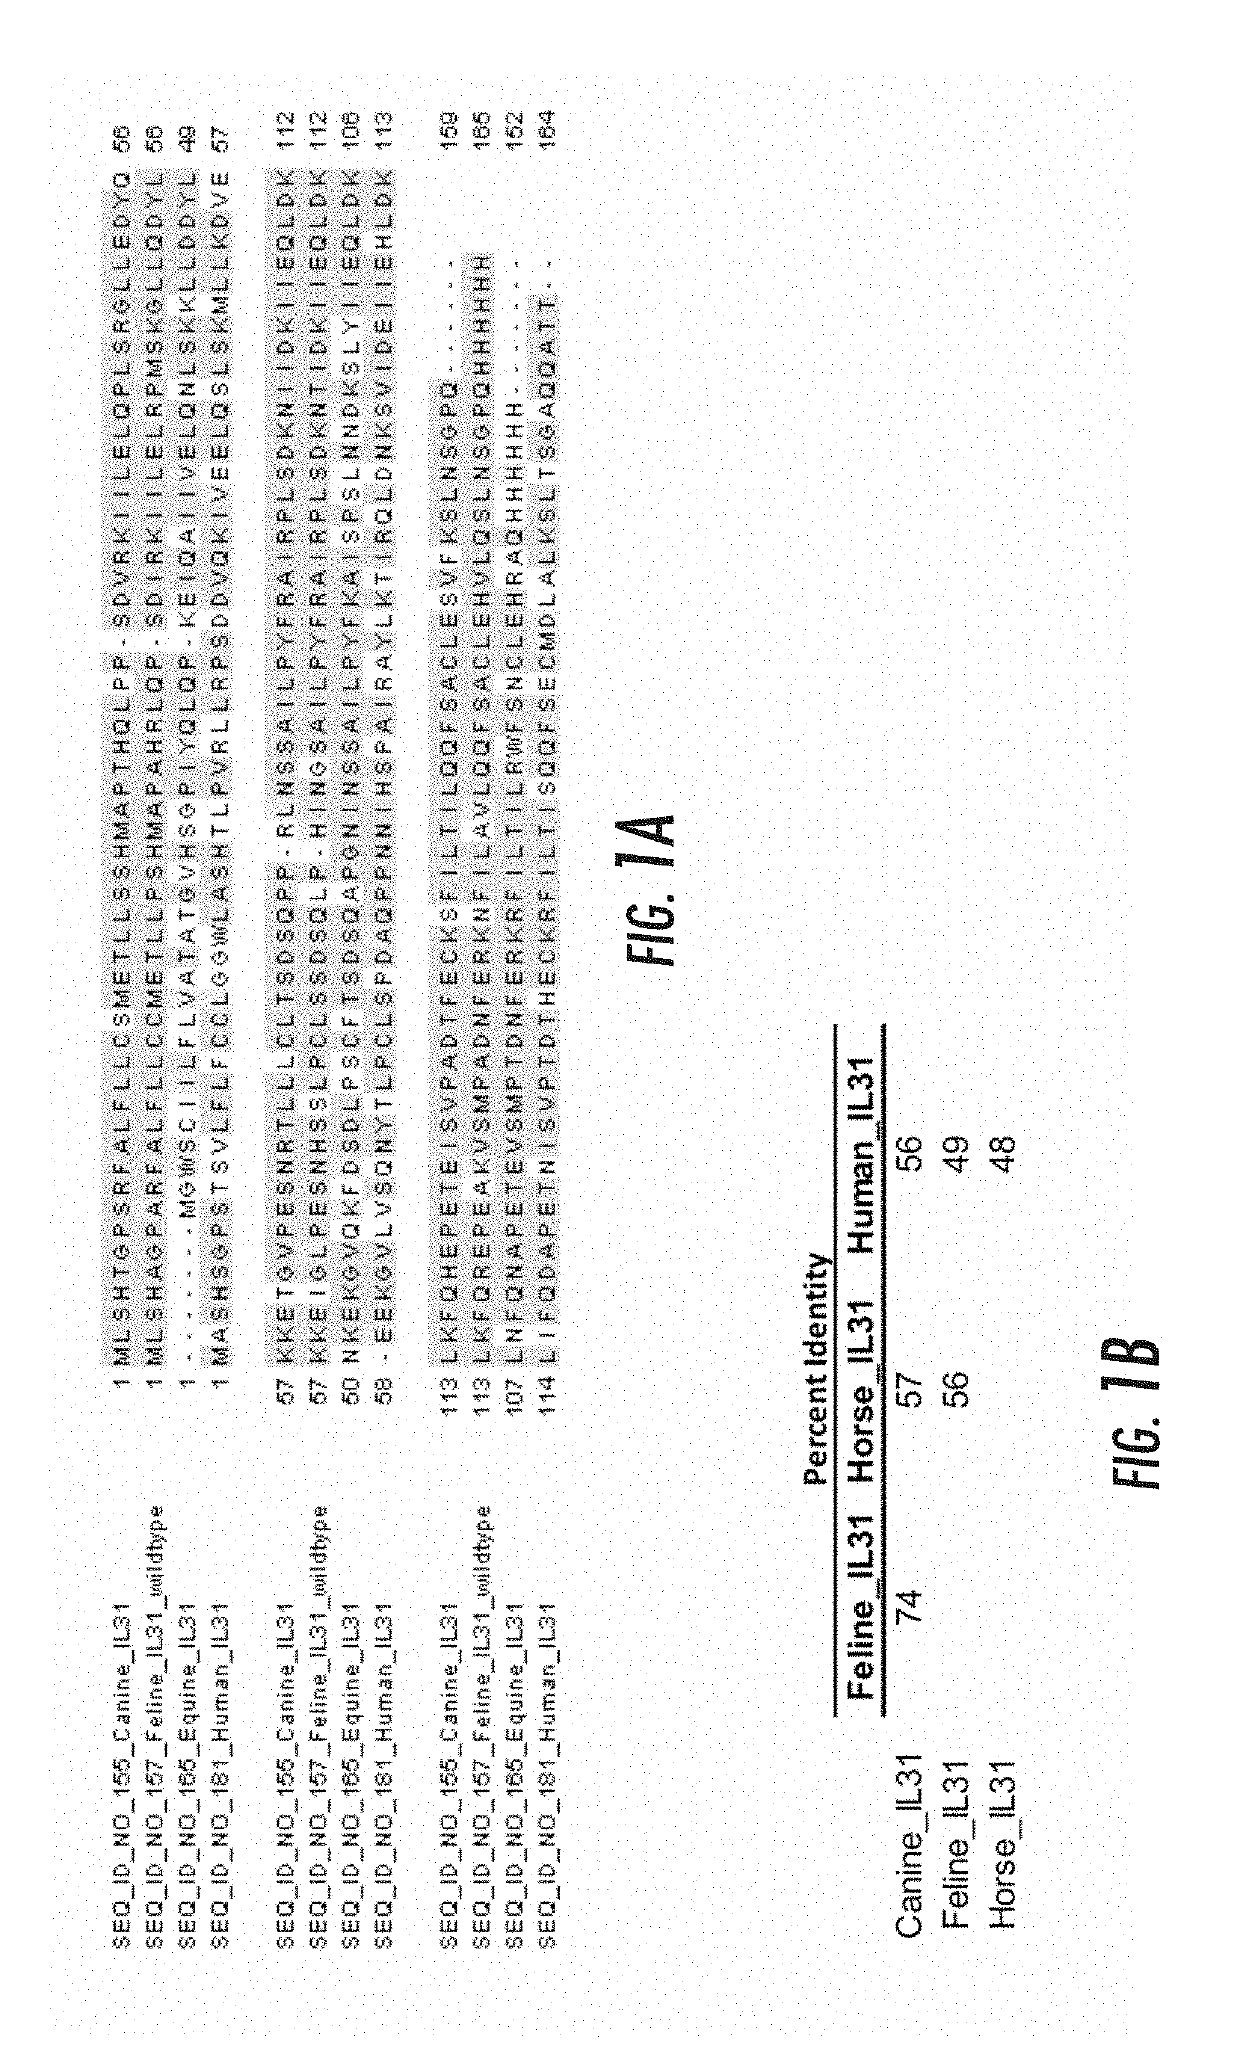 Peptide vaccines against interleukin-31